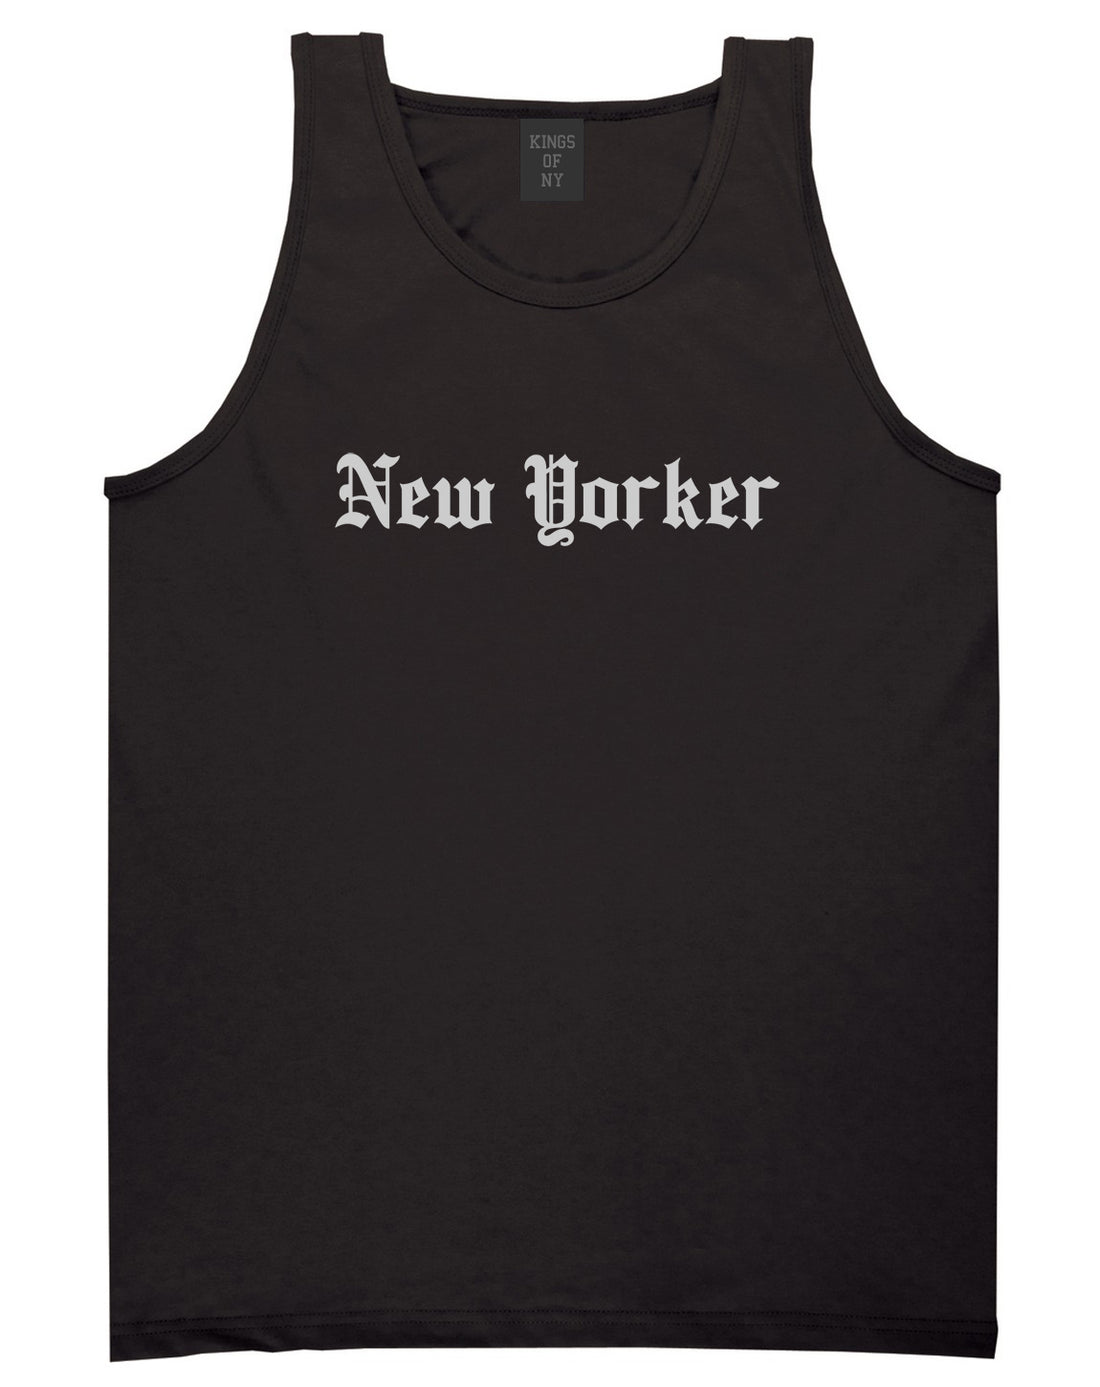 New Yorker Old English Mens Tank Top Shirt Black by Kings Of NY